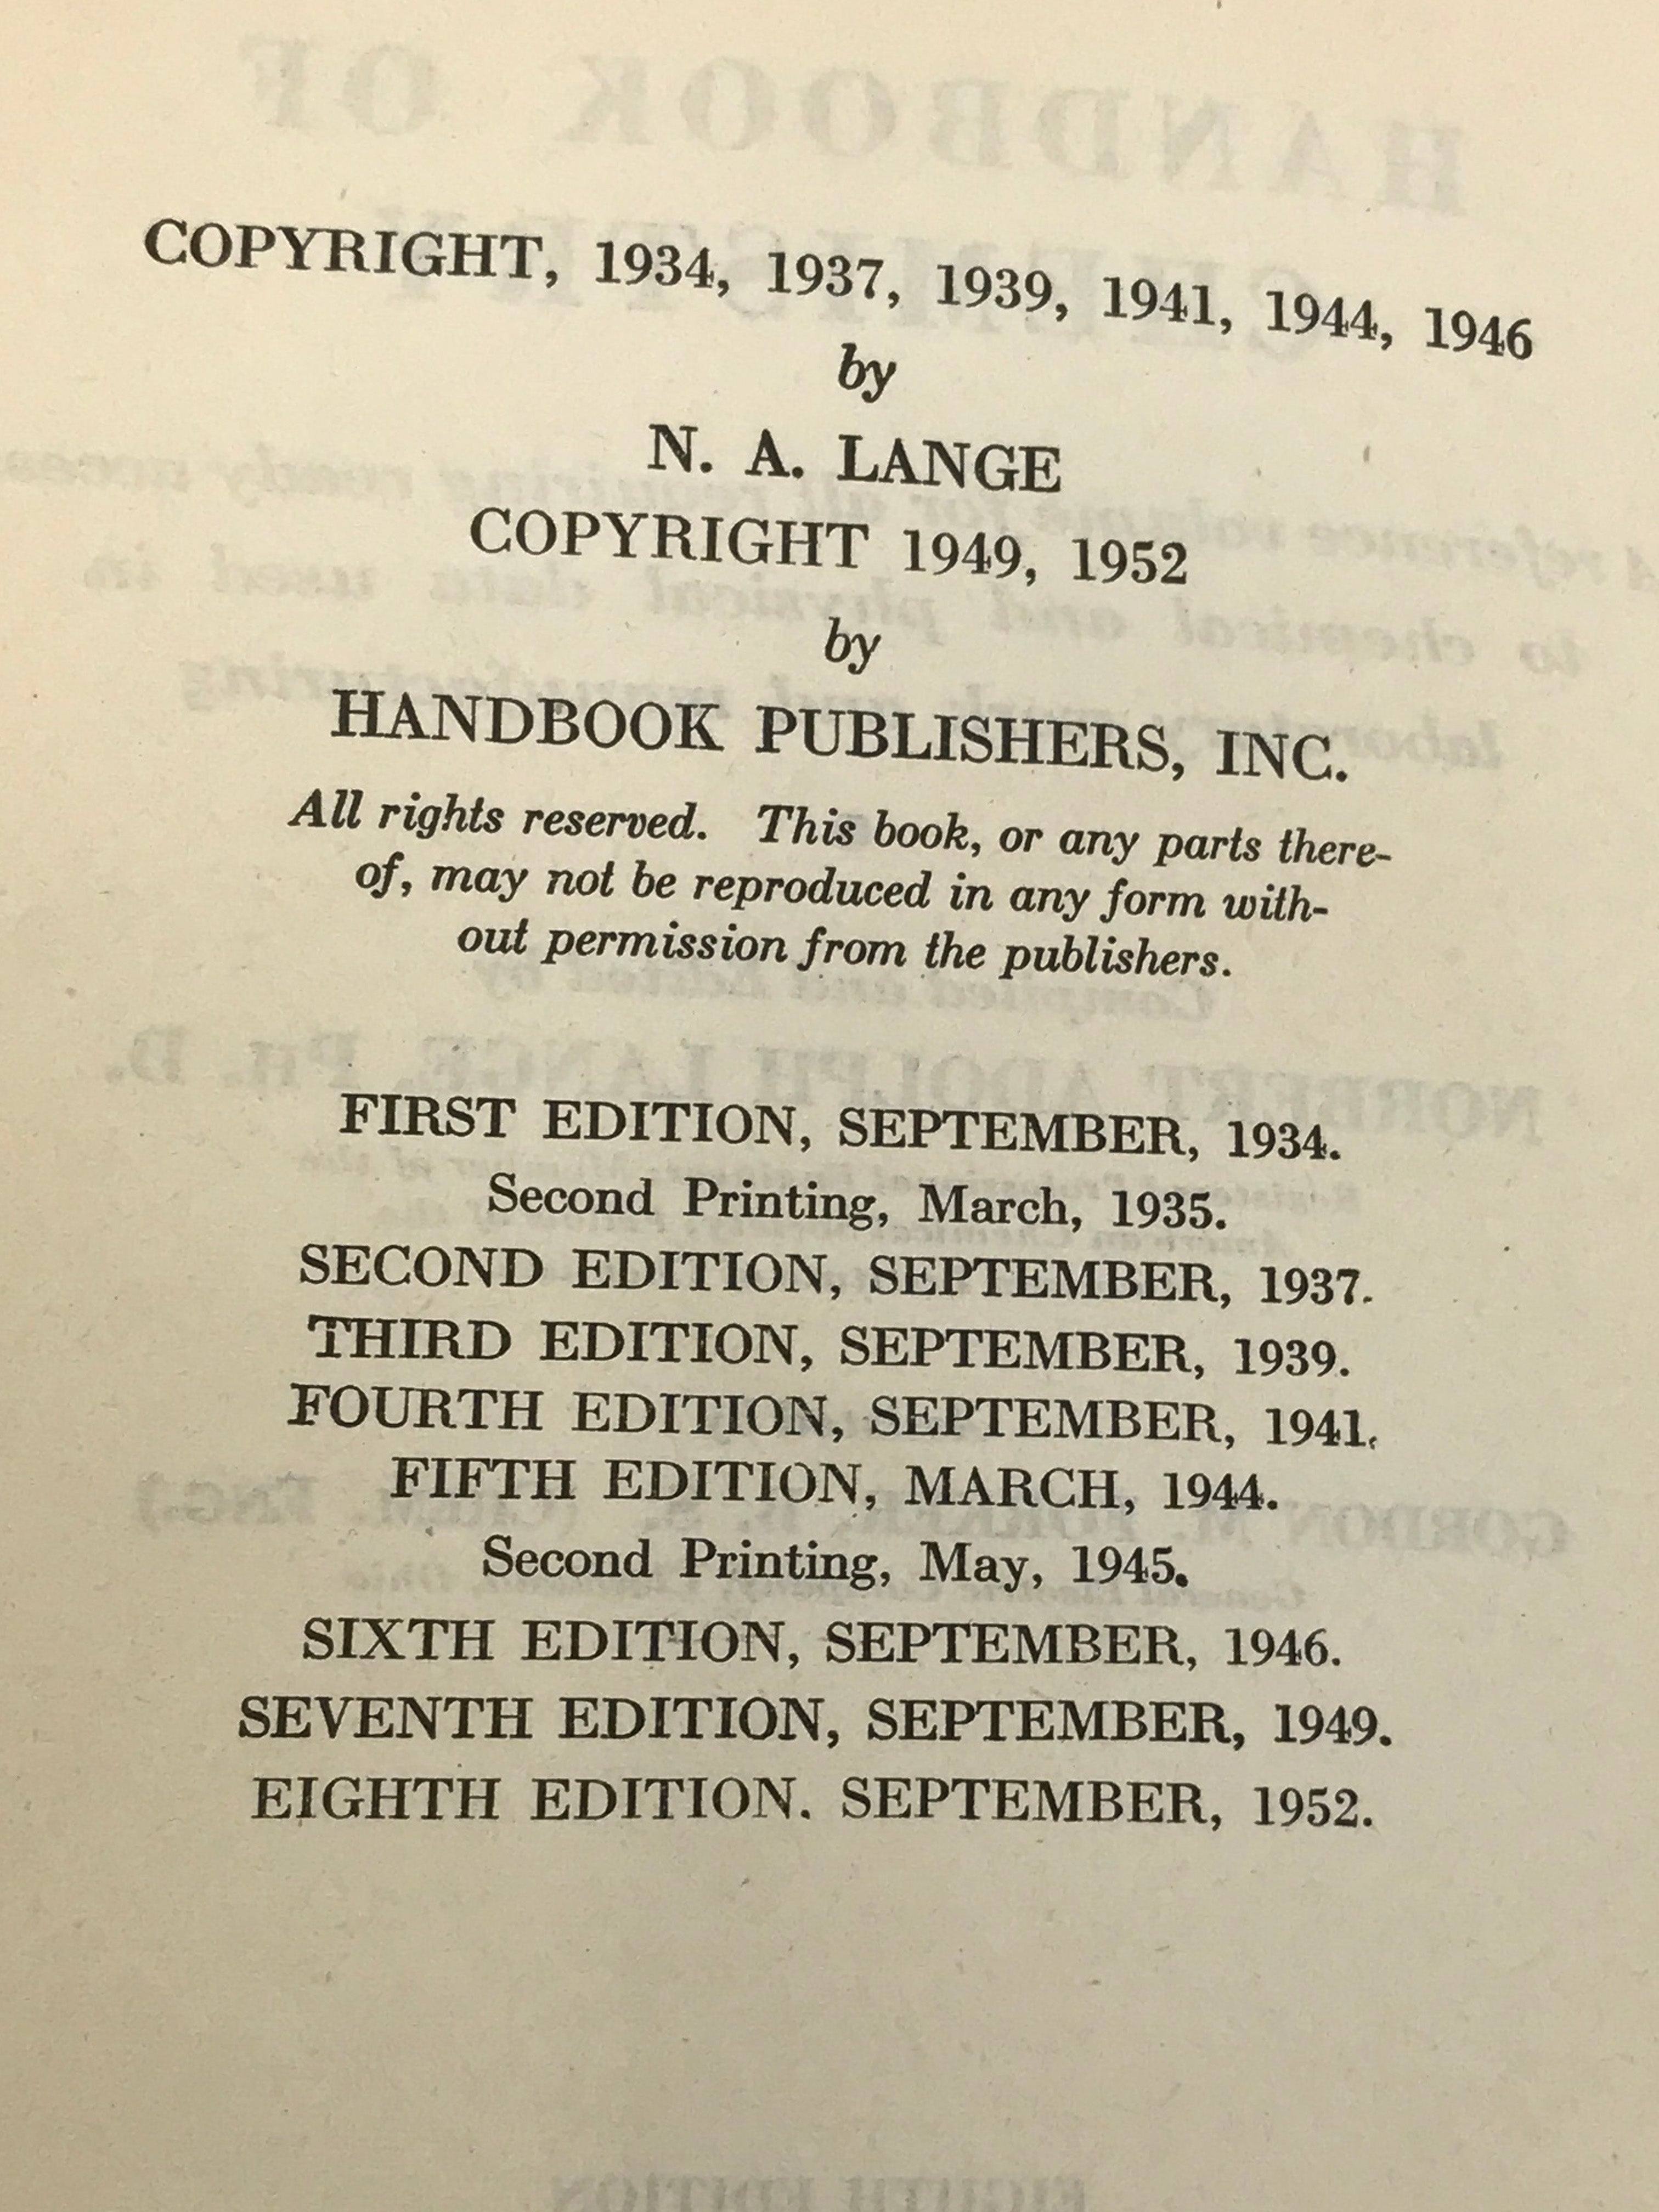 Handbook of Chemistry by Norbert Lange Eighth Edition 1952 HC